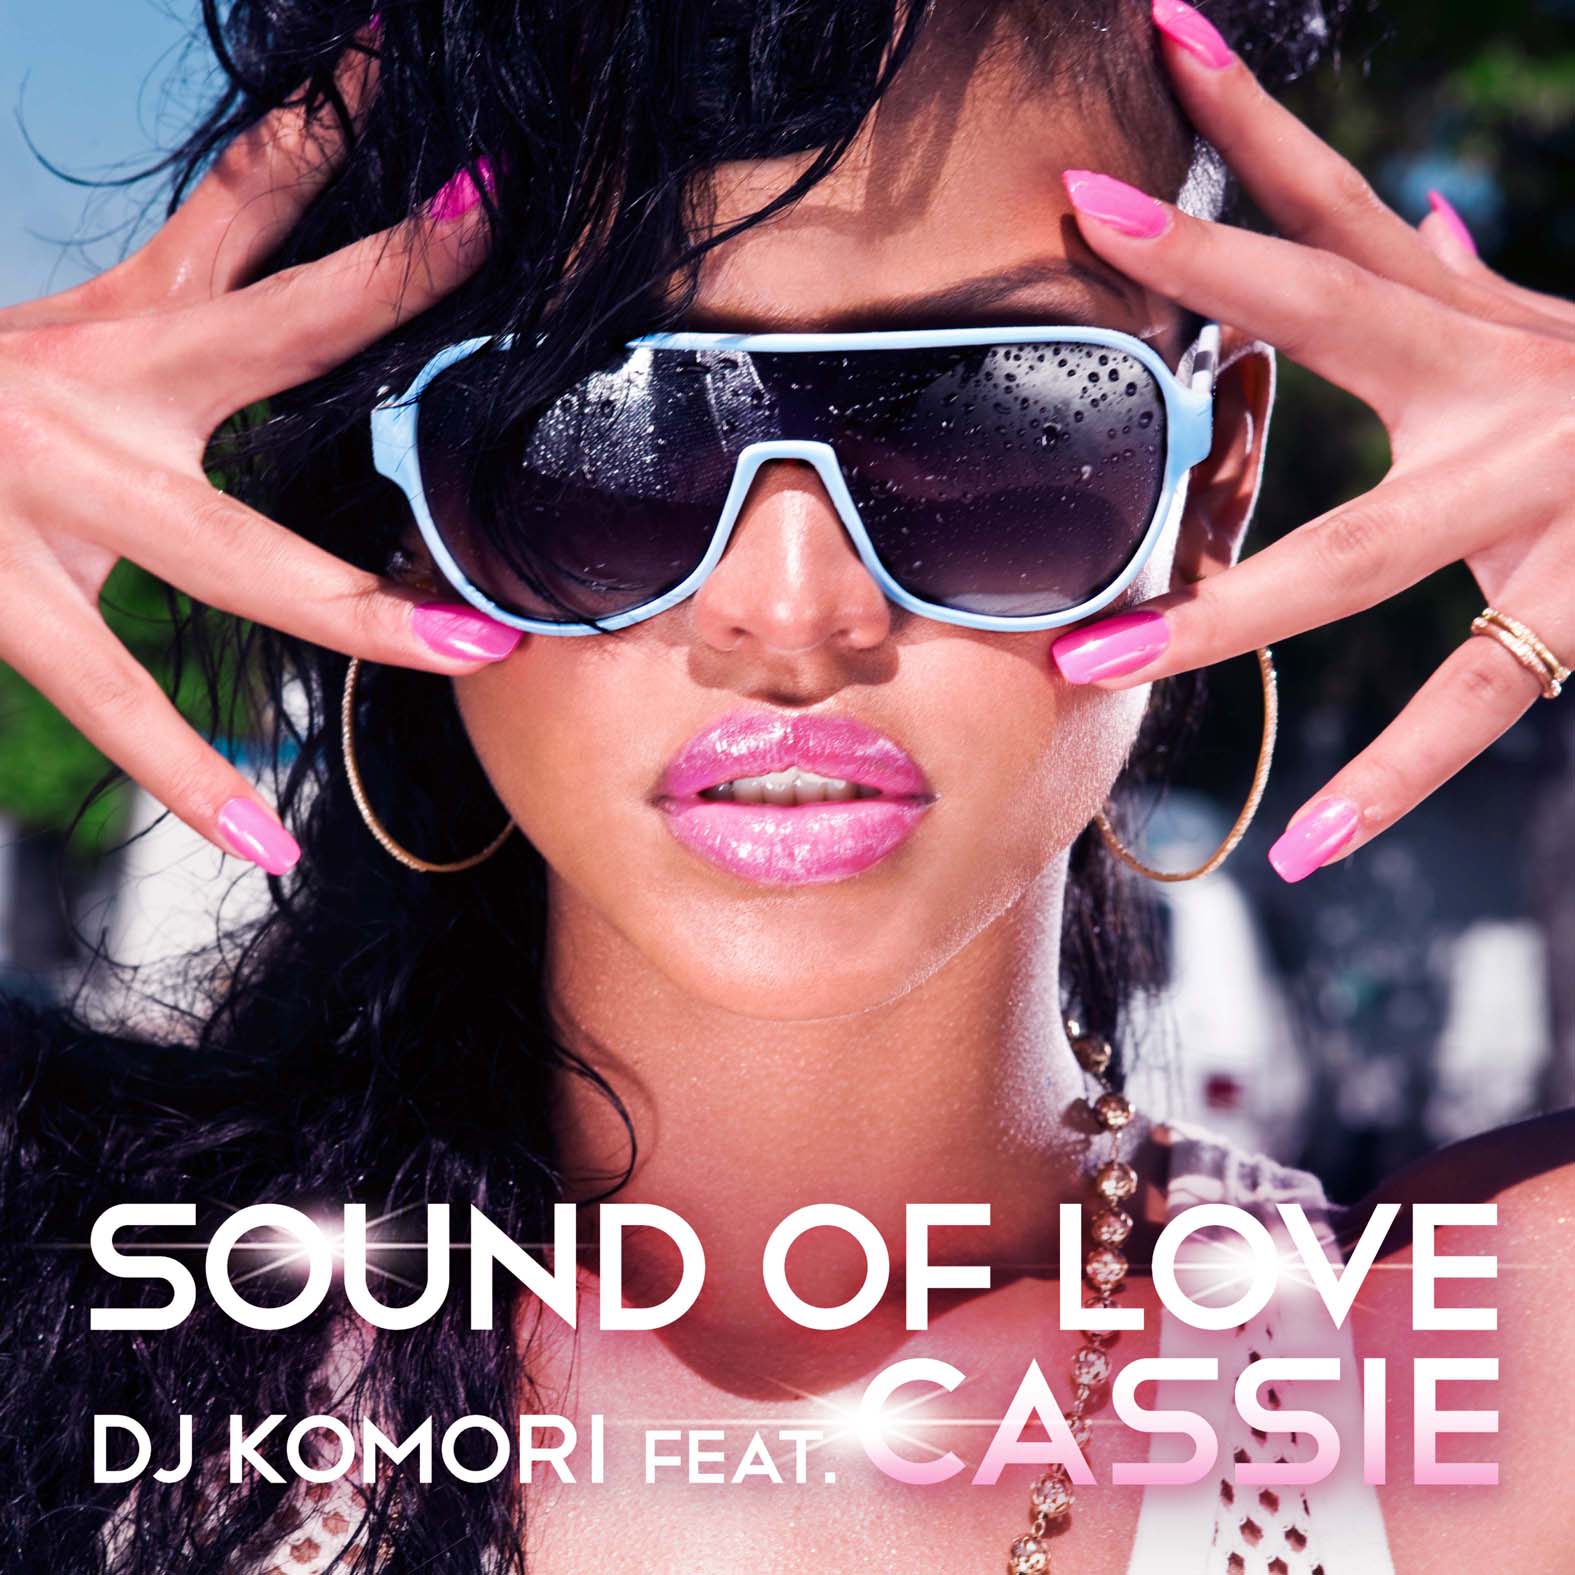 Love Sound. Cassi DJ. Фото девушек лов саунд.